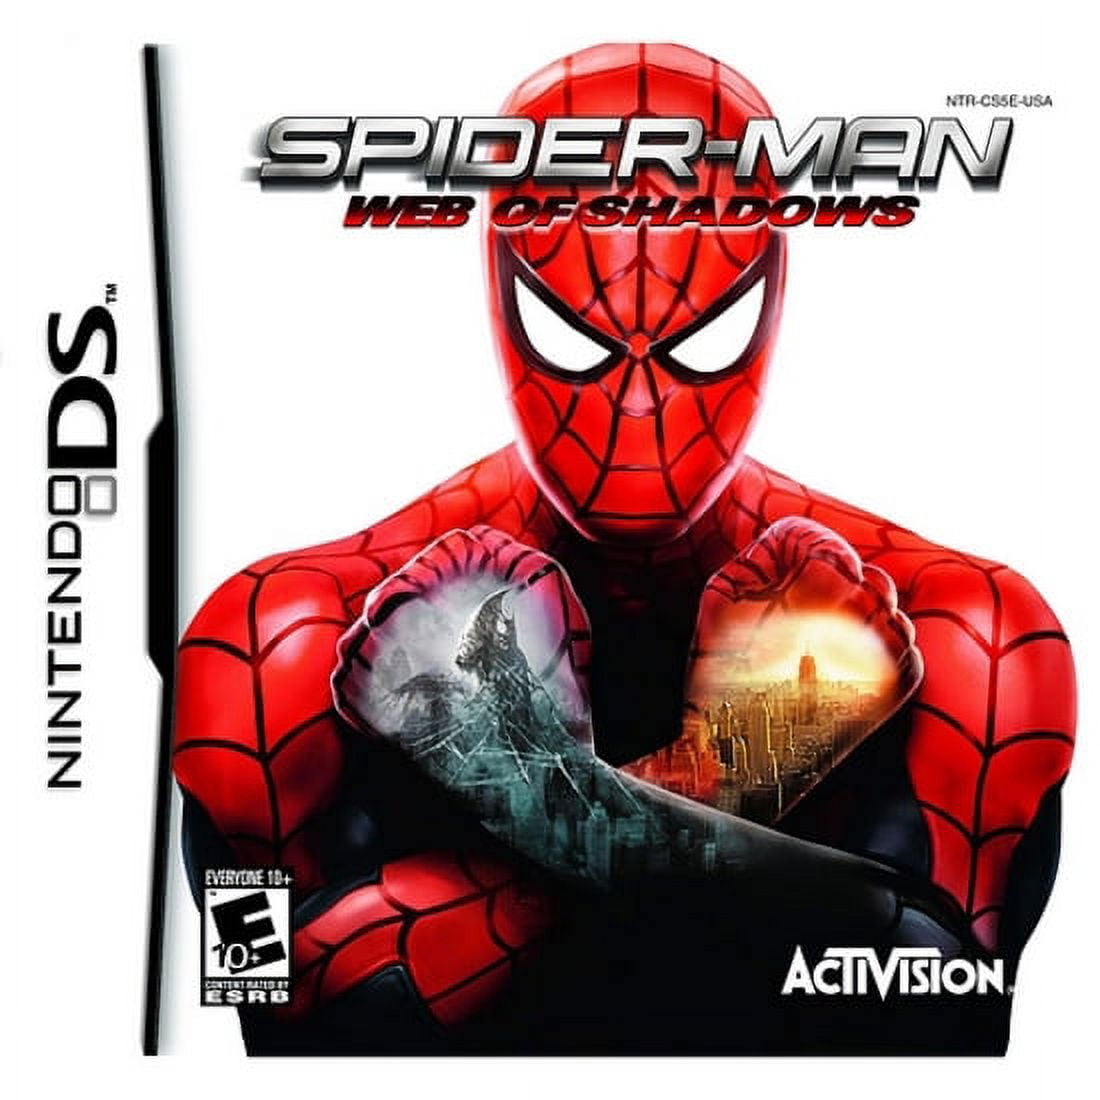 Spider Man Web of Shadows Free Download